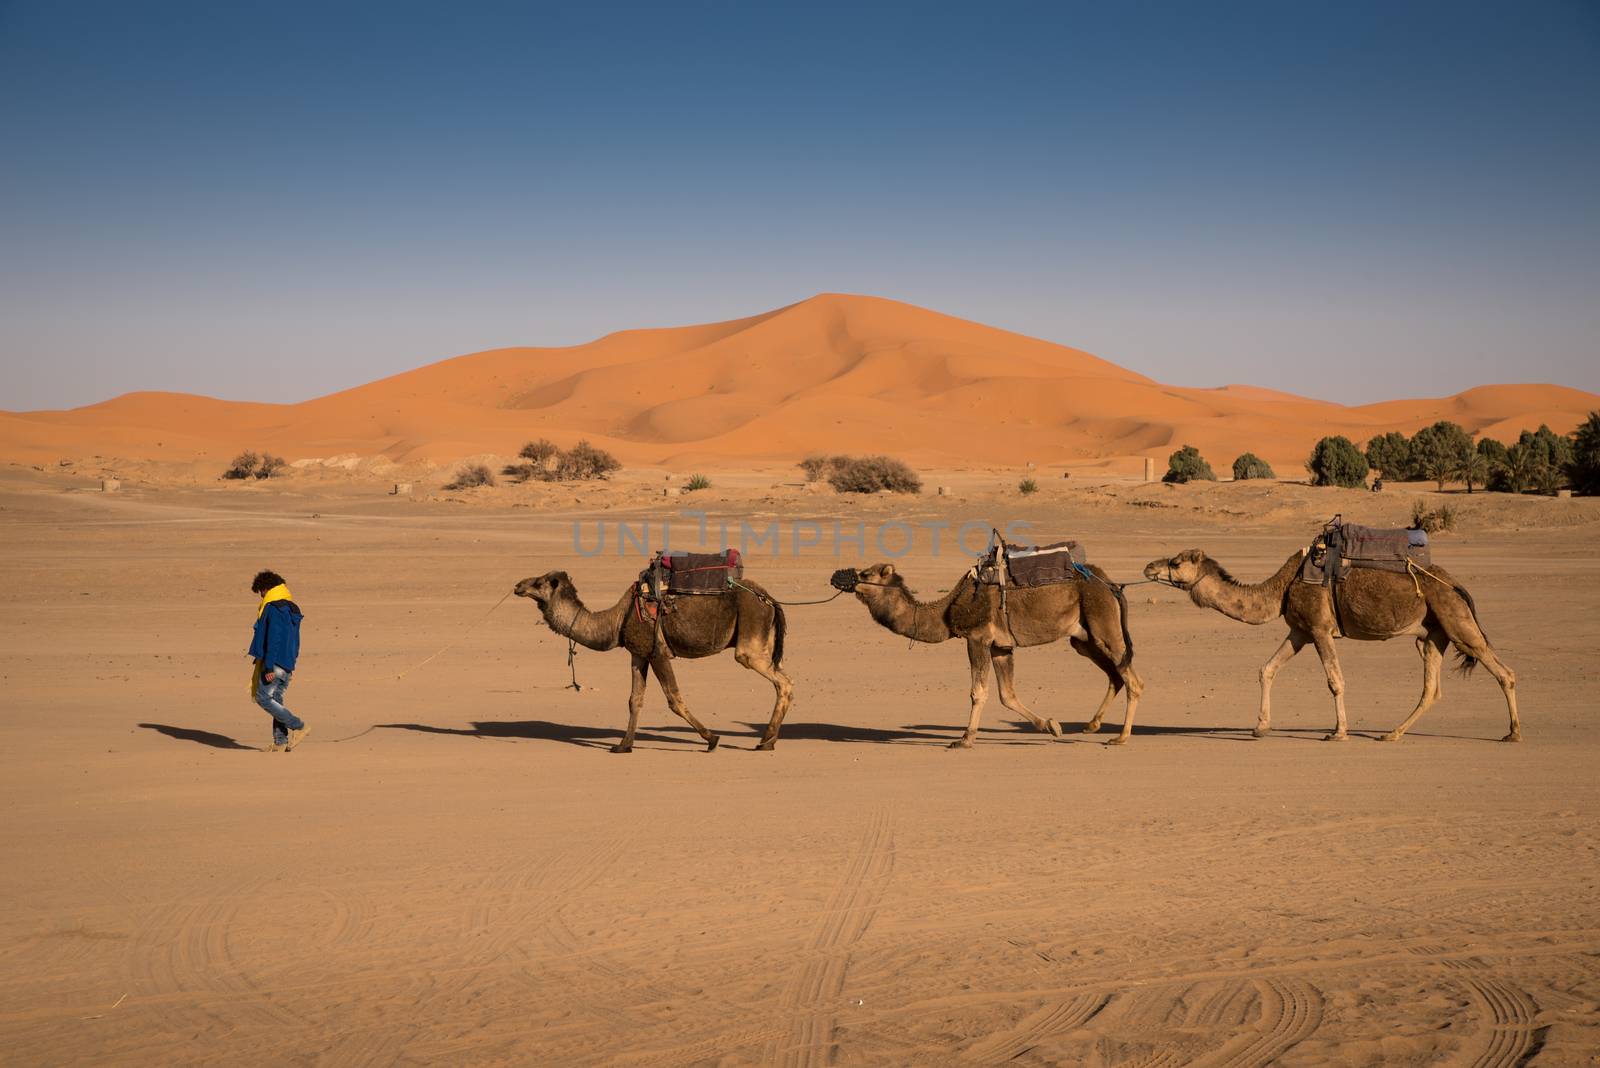 Berber man leading caravan, Hassilabied, Sahara Desert, Morocco by johnnychaos